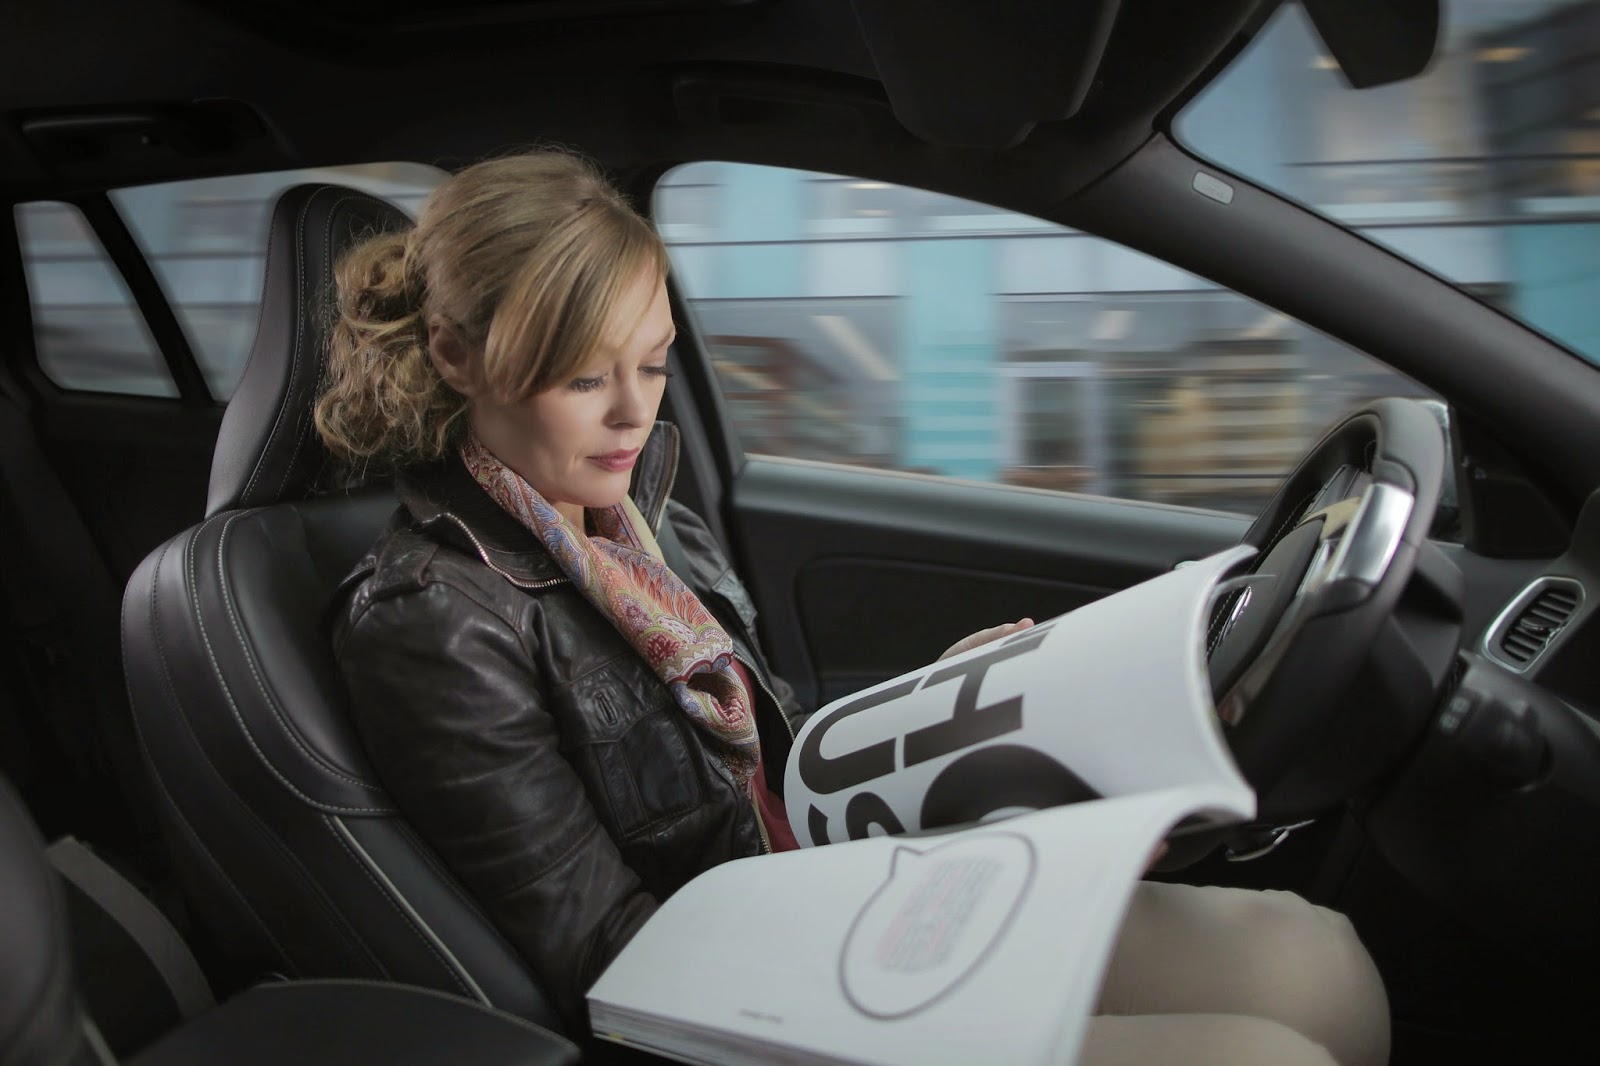 DRIVE ME: Πρόγραμμα αυτόνομης οδήγησης από τη Volvo στη Σουηδία - Φωτογραφία 1